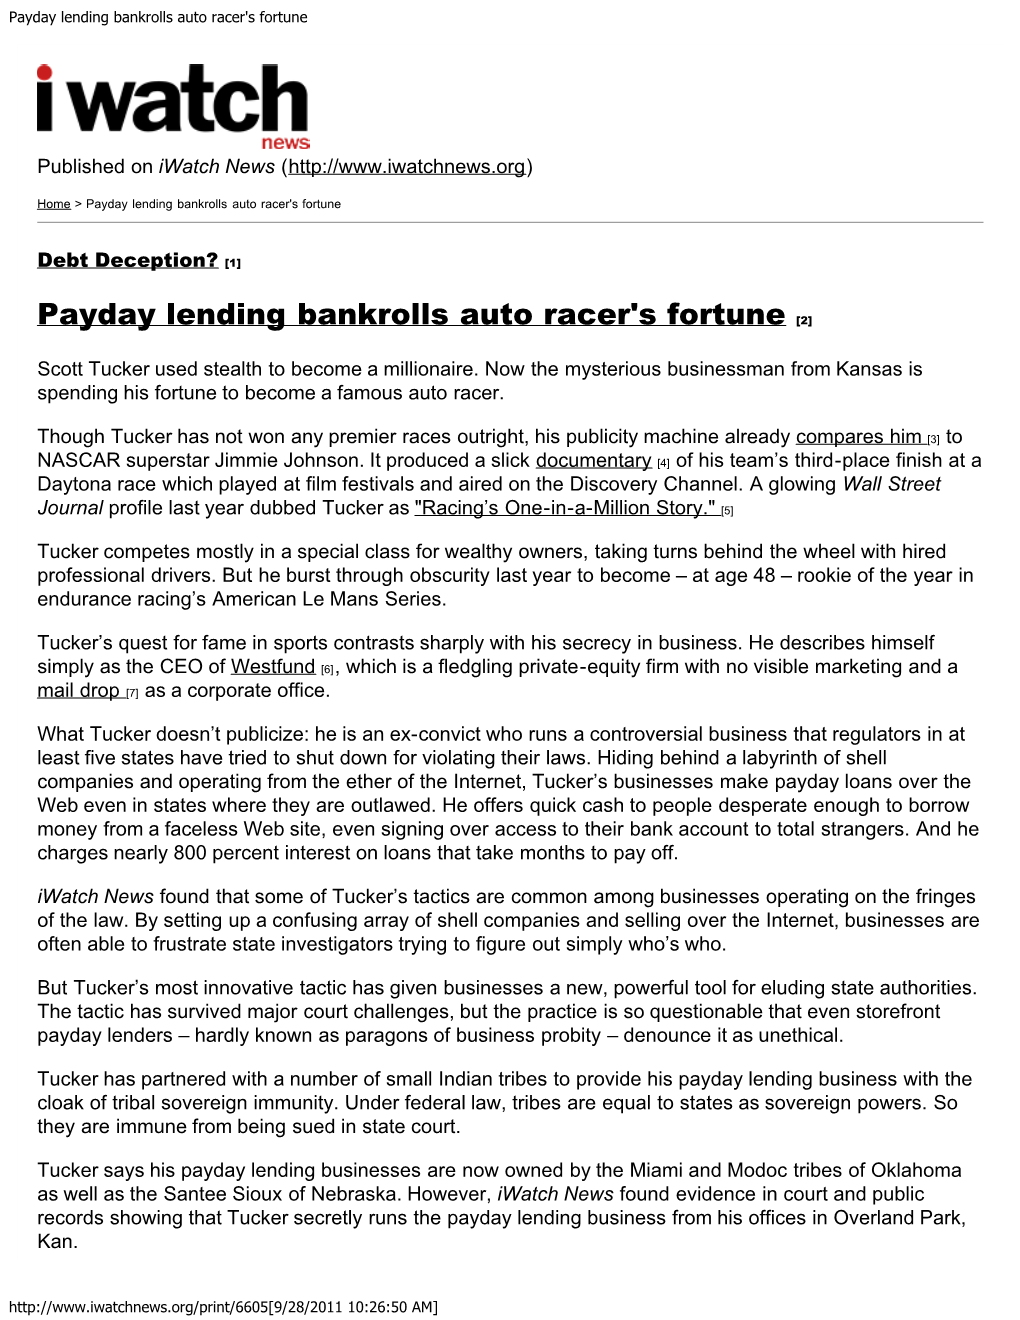 Payday Lending Bankrolls Auto Racer's Fortune